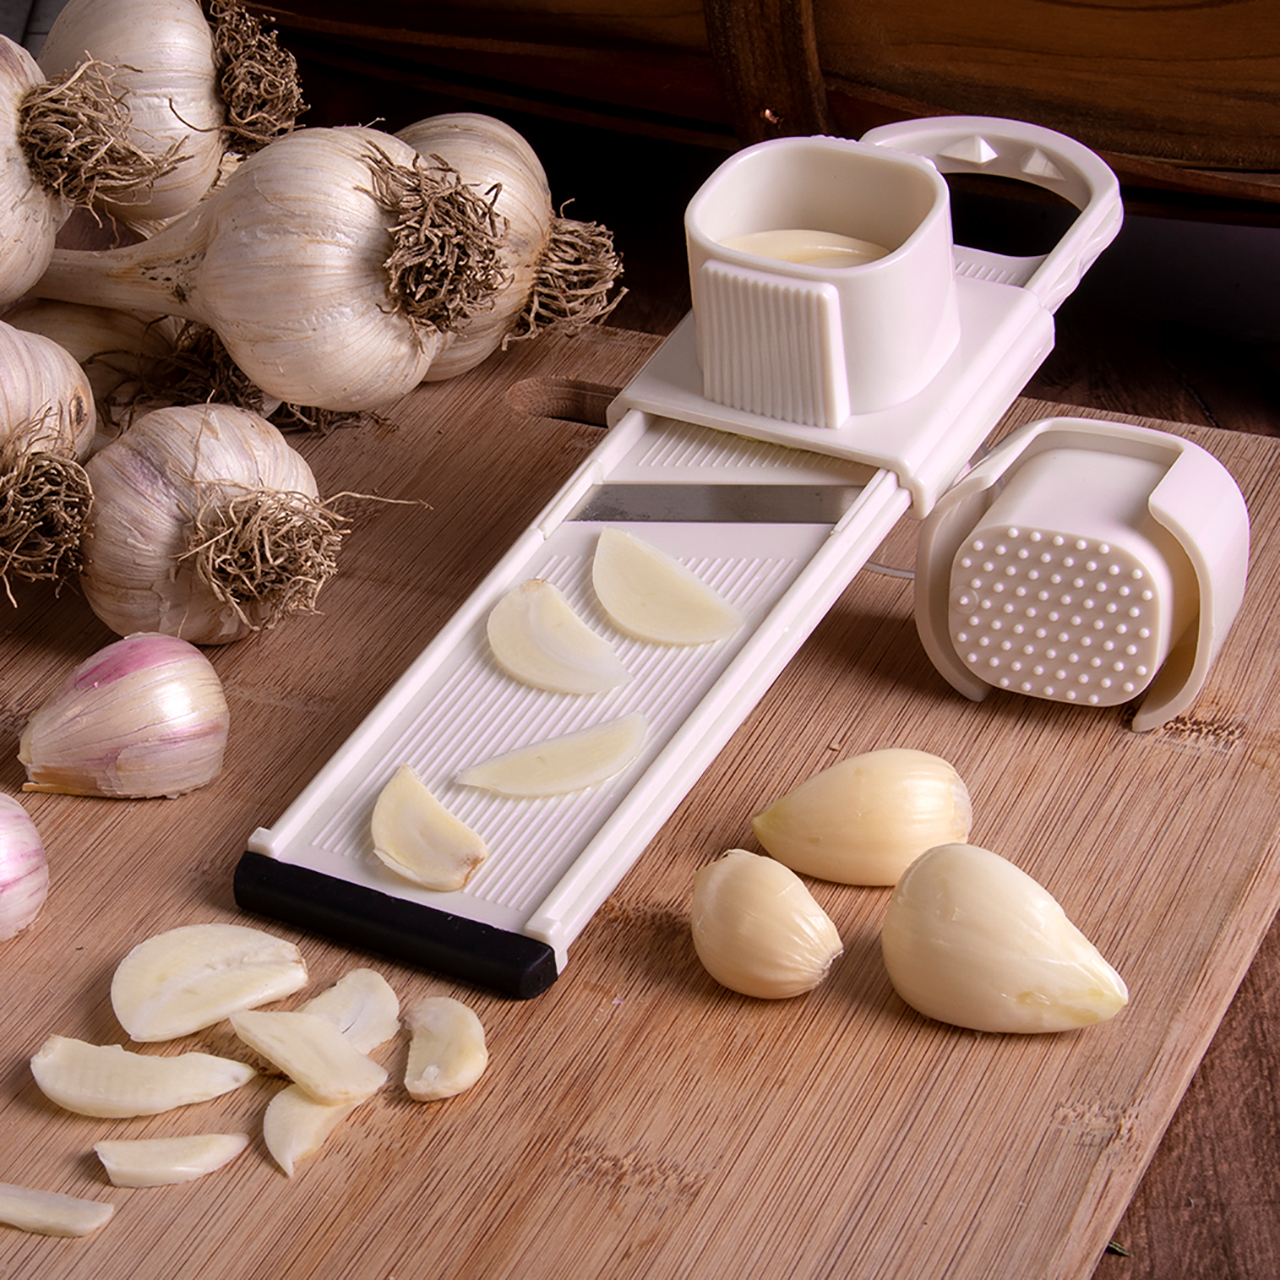 Norpro - Ultimate Garlic Press/Slicer